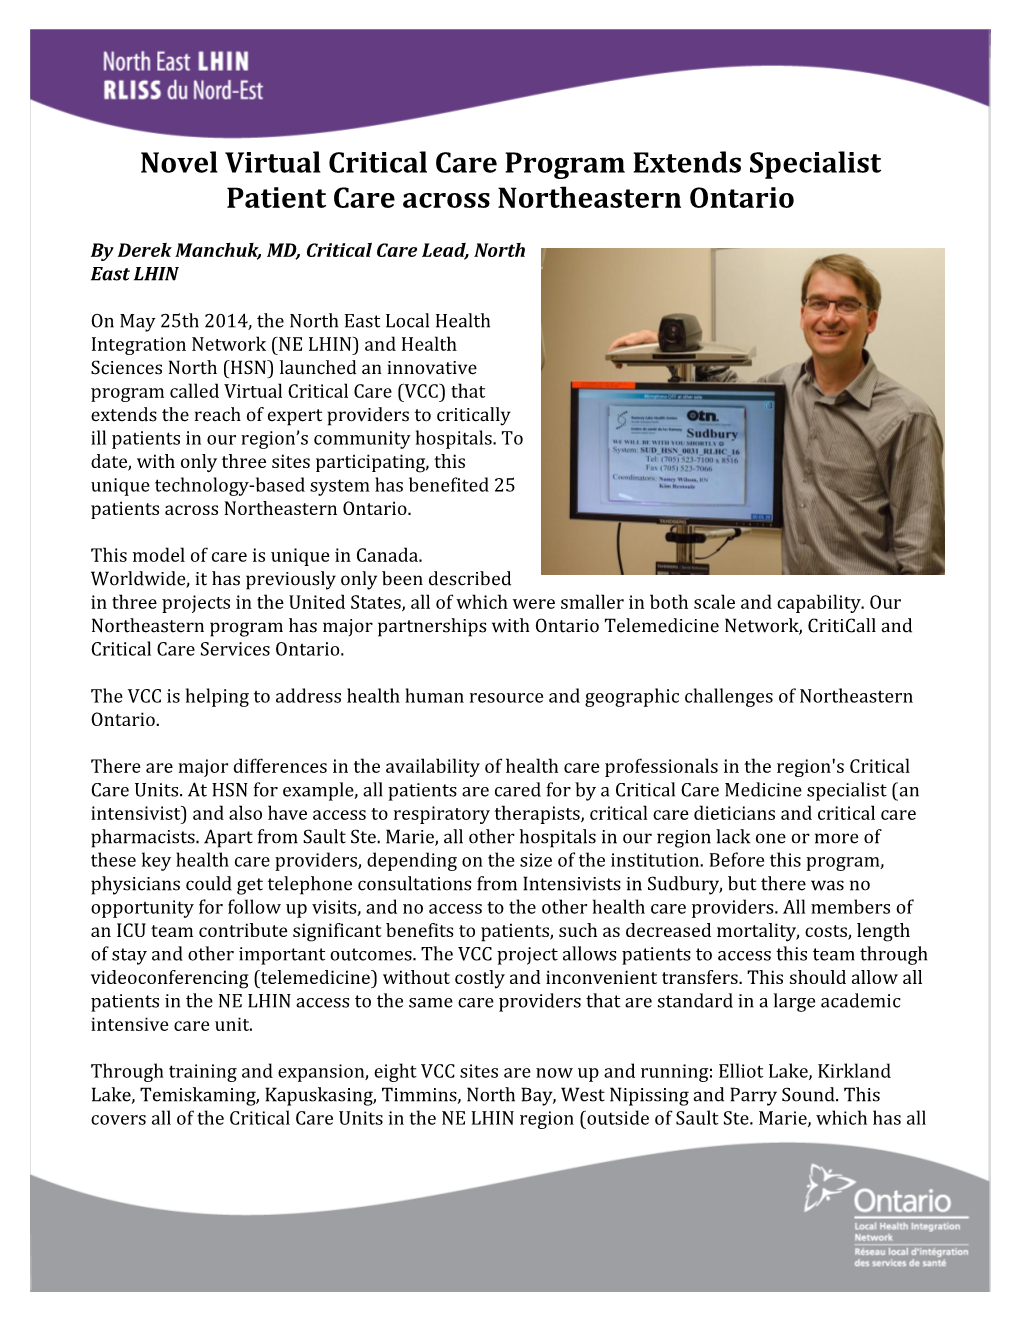 Novel Virtual Critical Care Program Extends Specialist Patient Care Across Northeastern Ontario